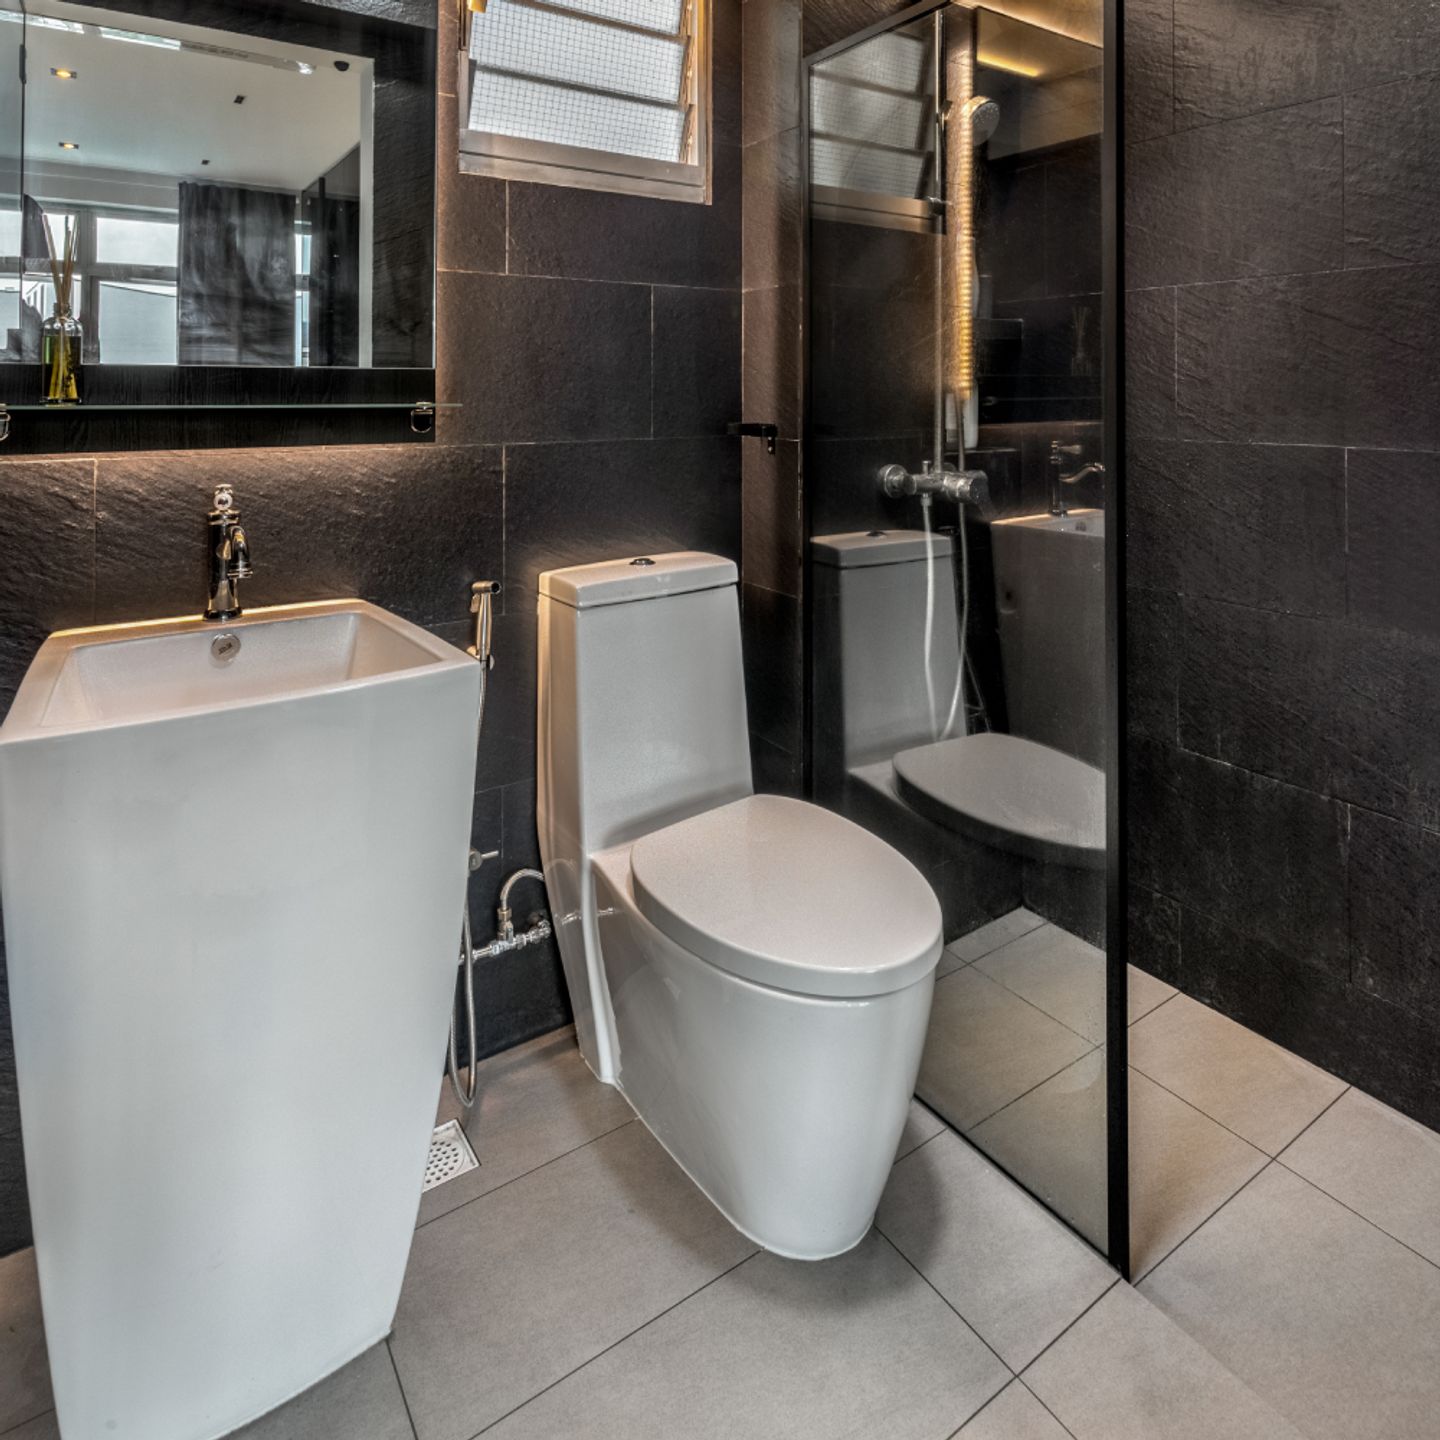 Dual-Toned Bathroom Design With Warm Lighting - Livspace